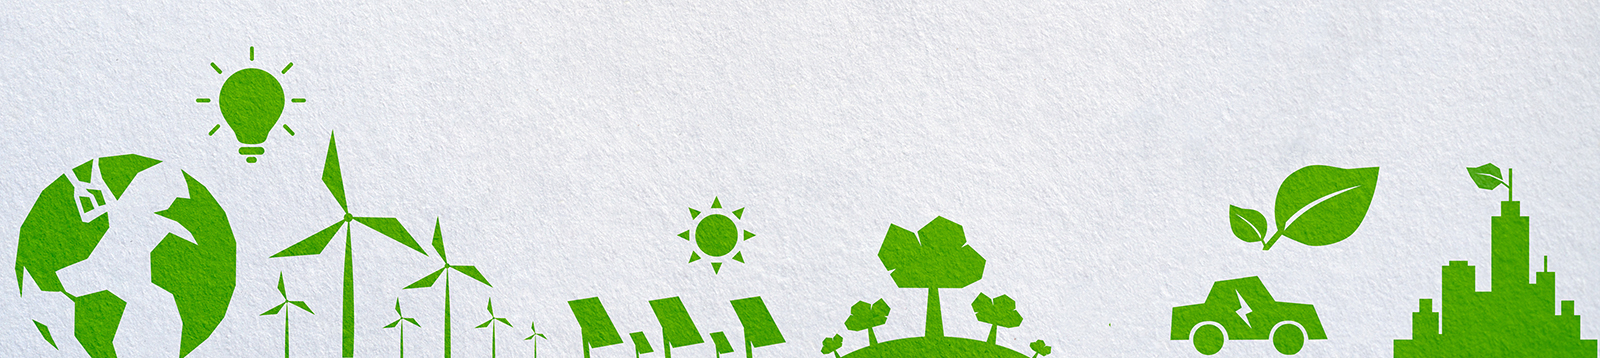 green climate change symbols